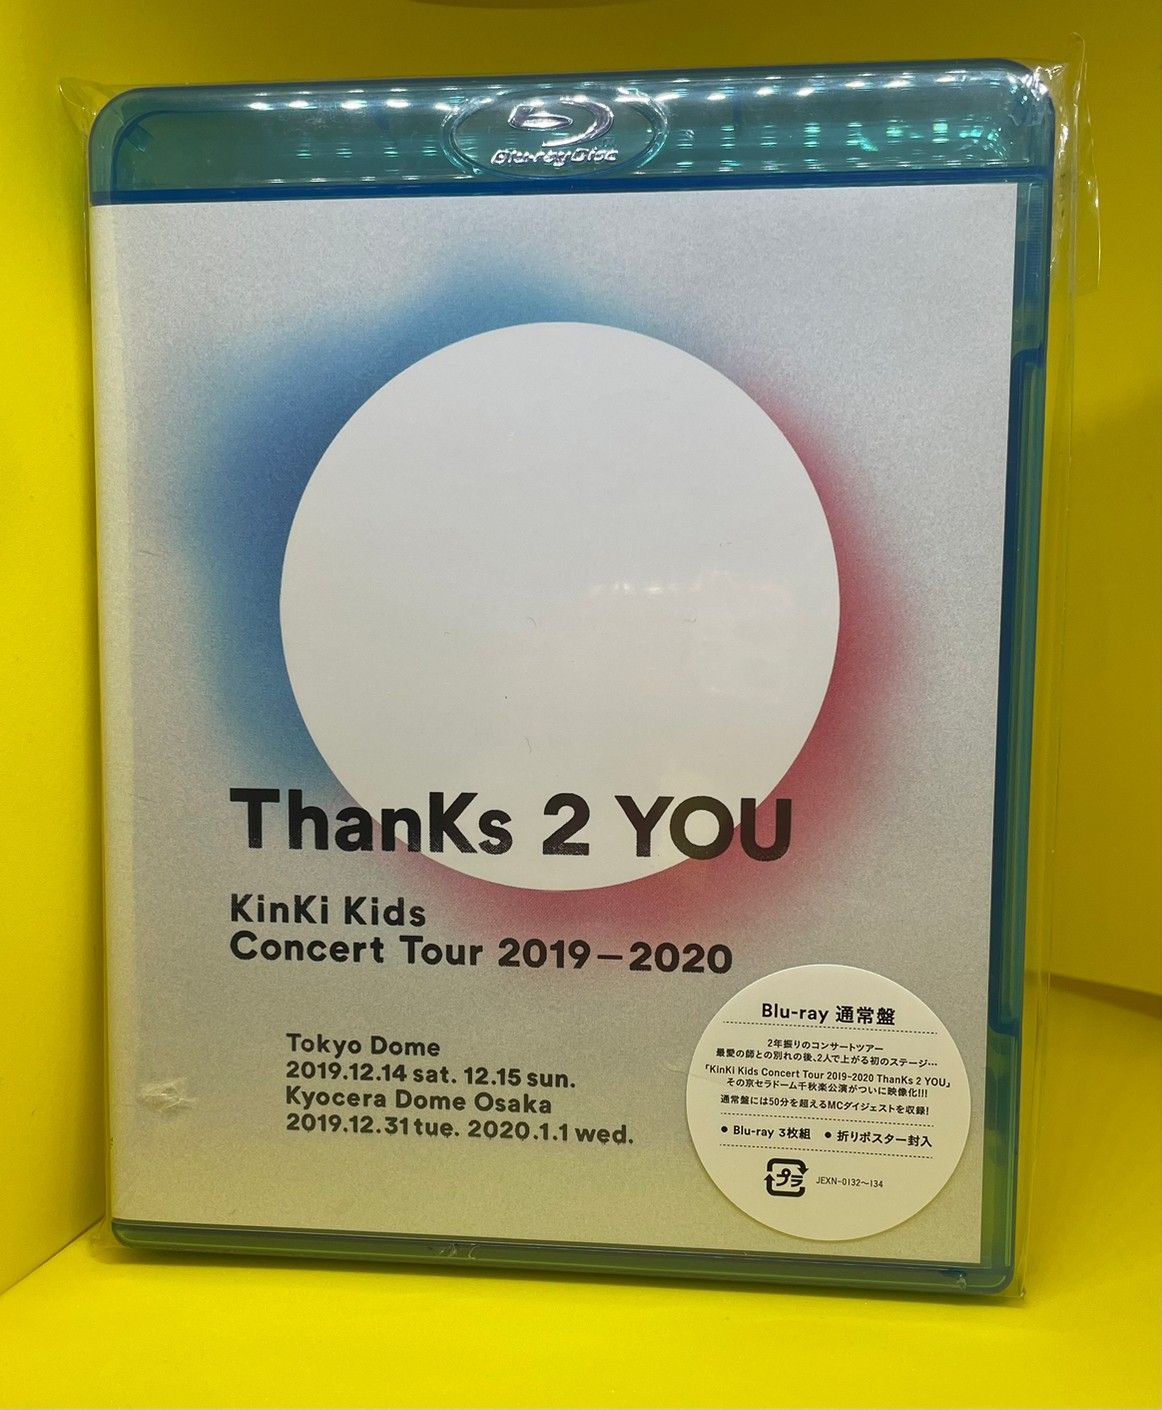 ThanKs 2 YOU KinKi Kids 通常盤 Blu-ray - DVD/ブルーレイ